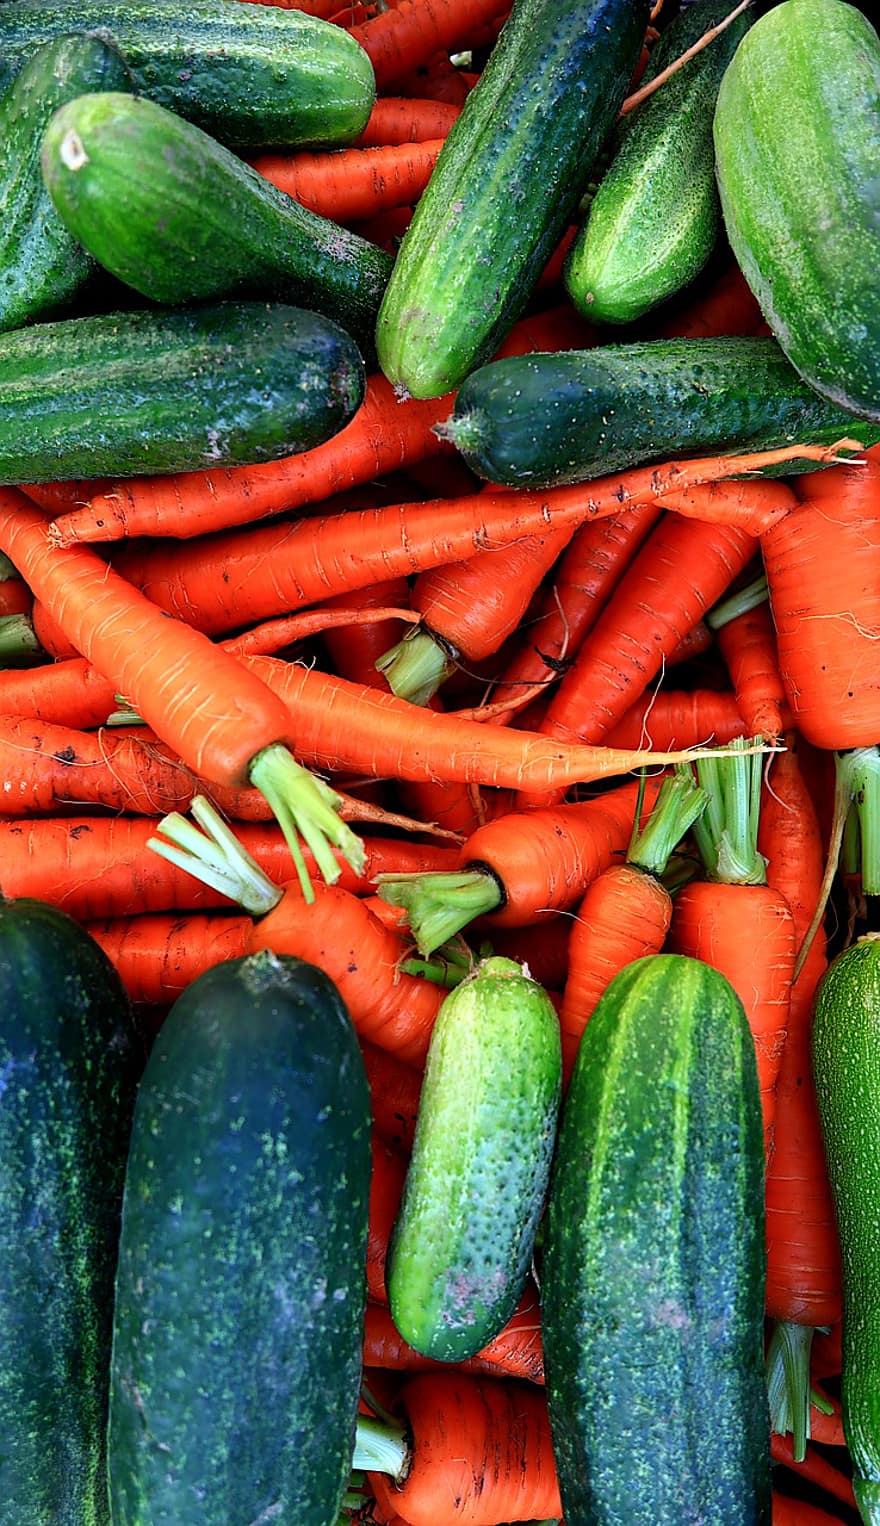 सब्जियां, खीरे, तुरई, लागत, गाजर, कृषि, स्वास्थ्य, हरा, पोषण, जैव, खा